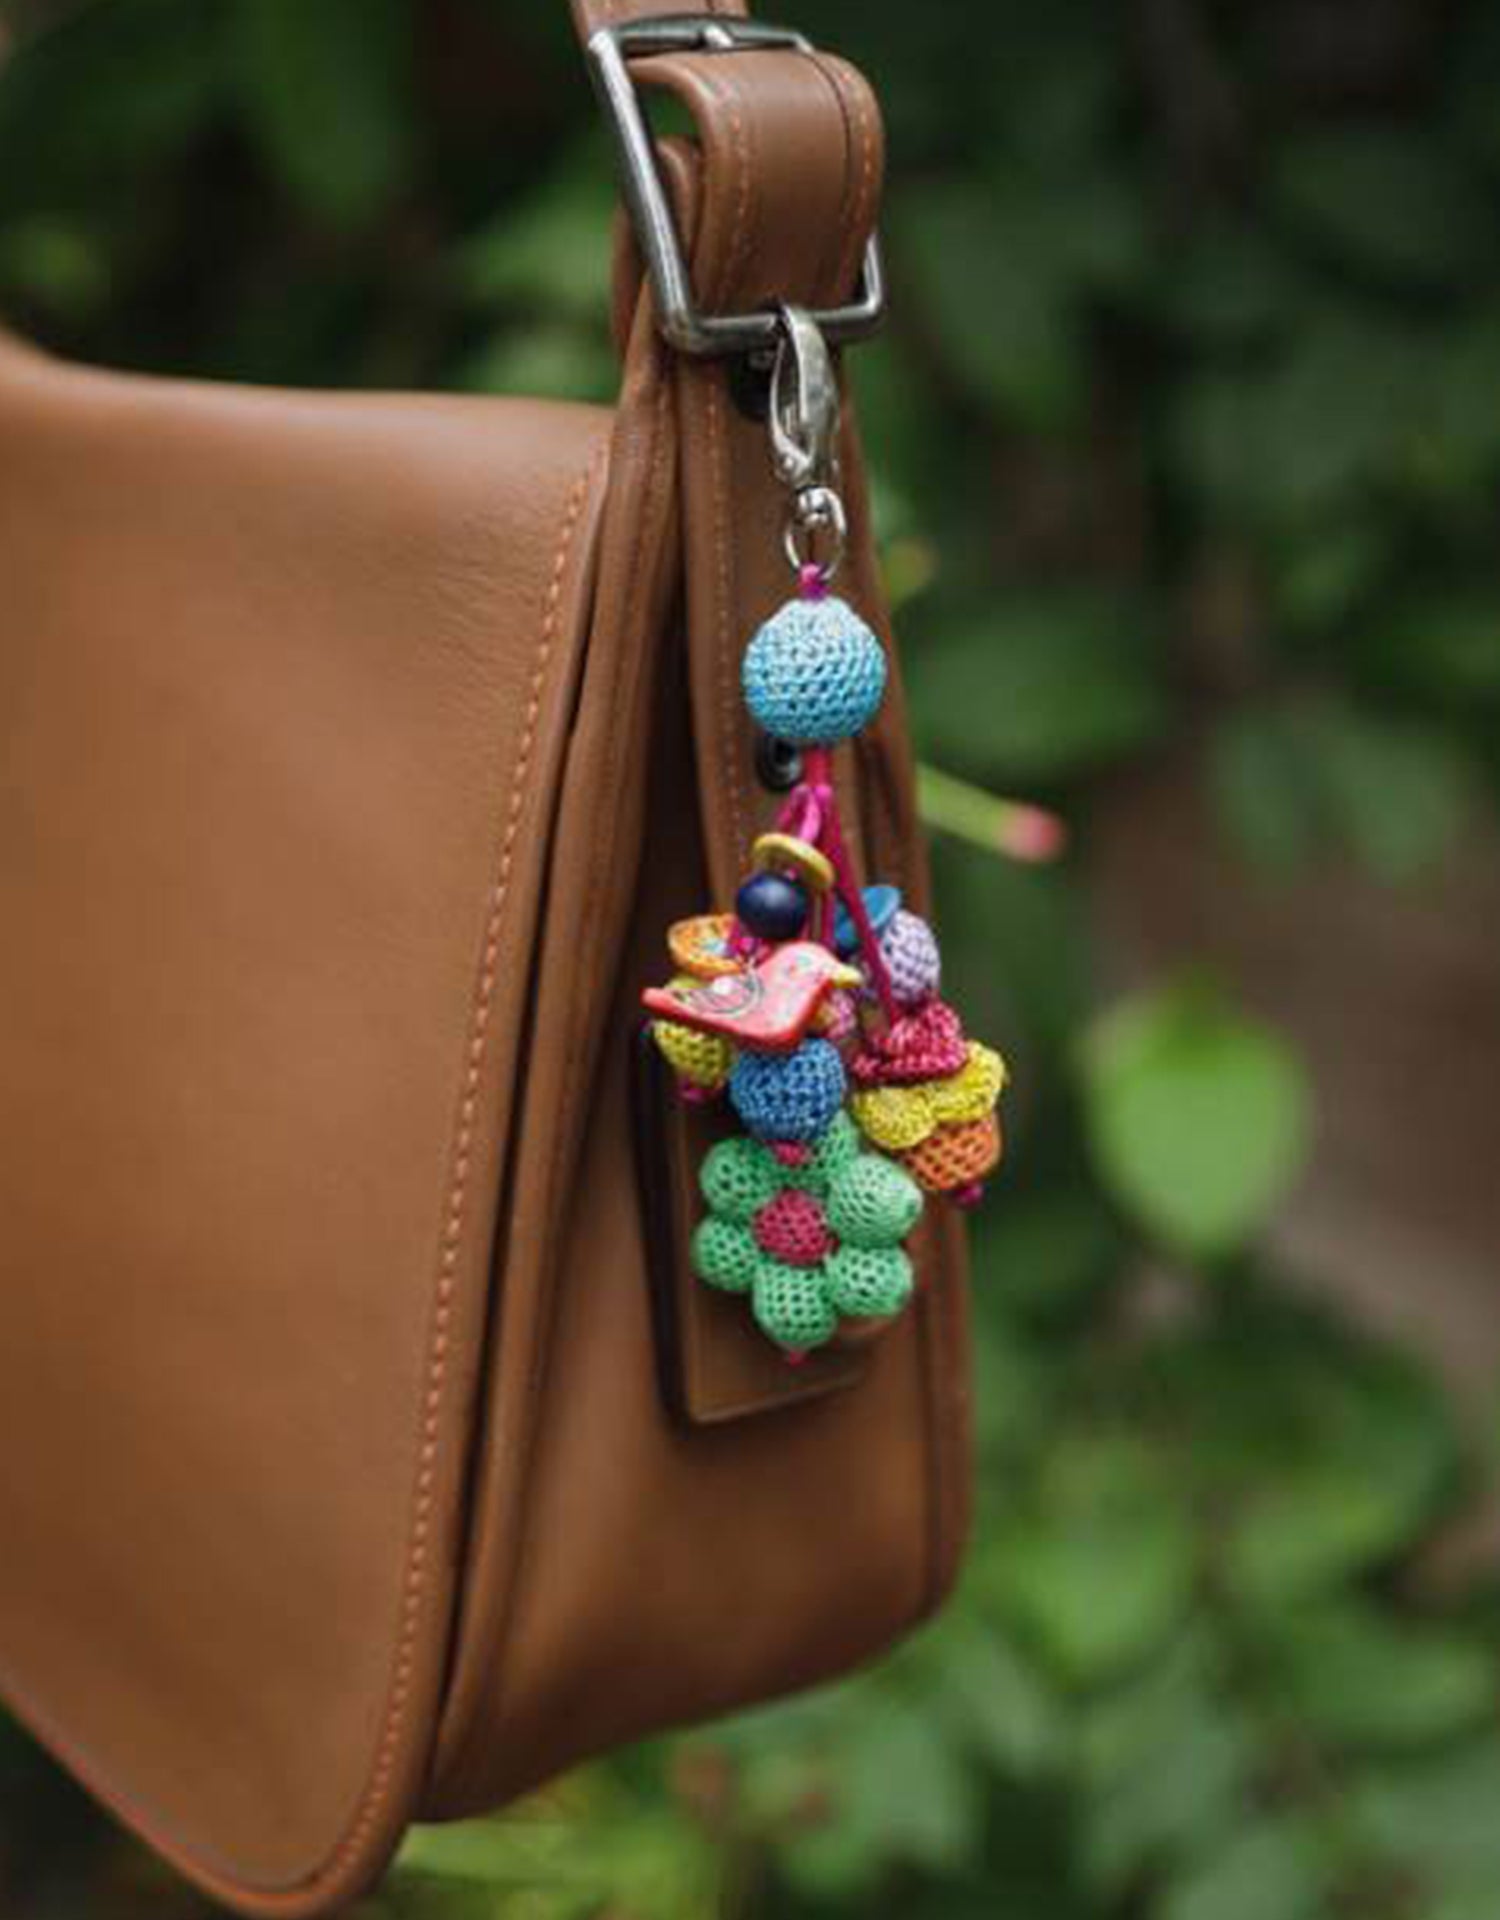 Glass Beaded Bohemian Handbag Charm Keychain Bag Charm,Green,Handmade